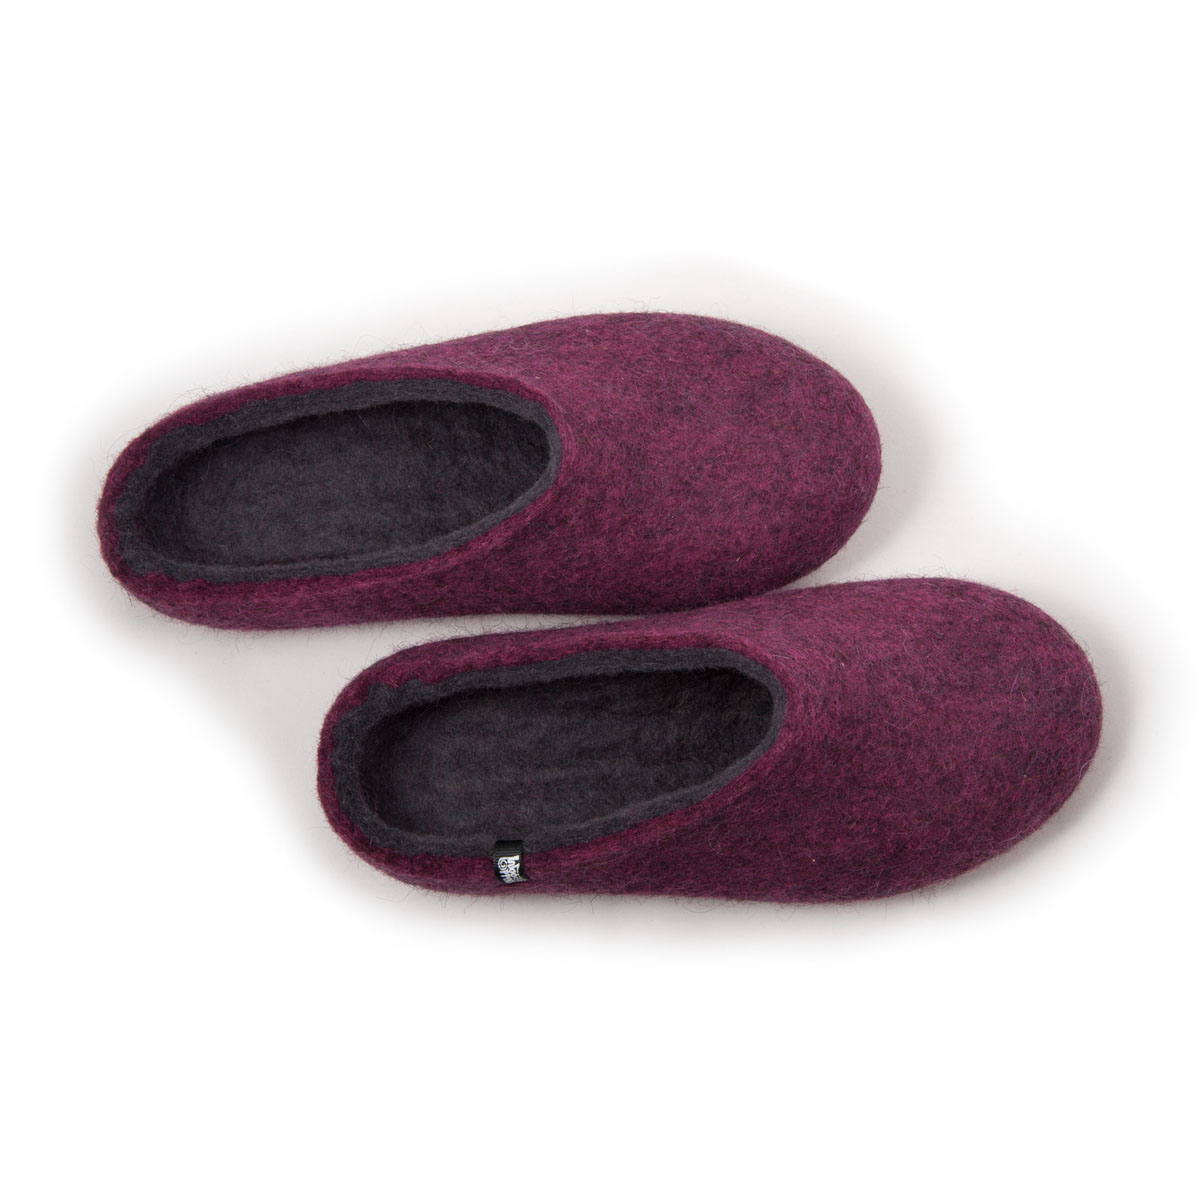 Bedroom slippers “COLORI” plum – anthracite